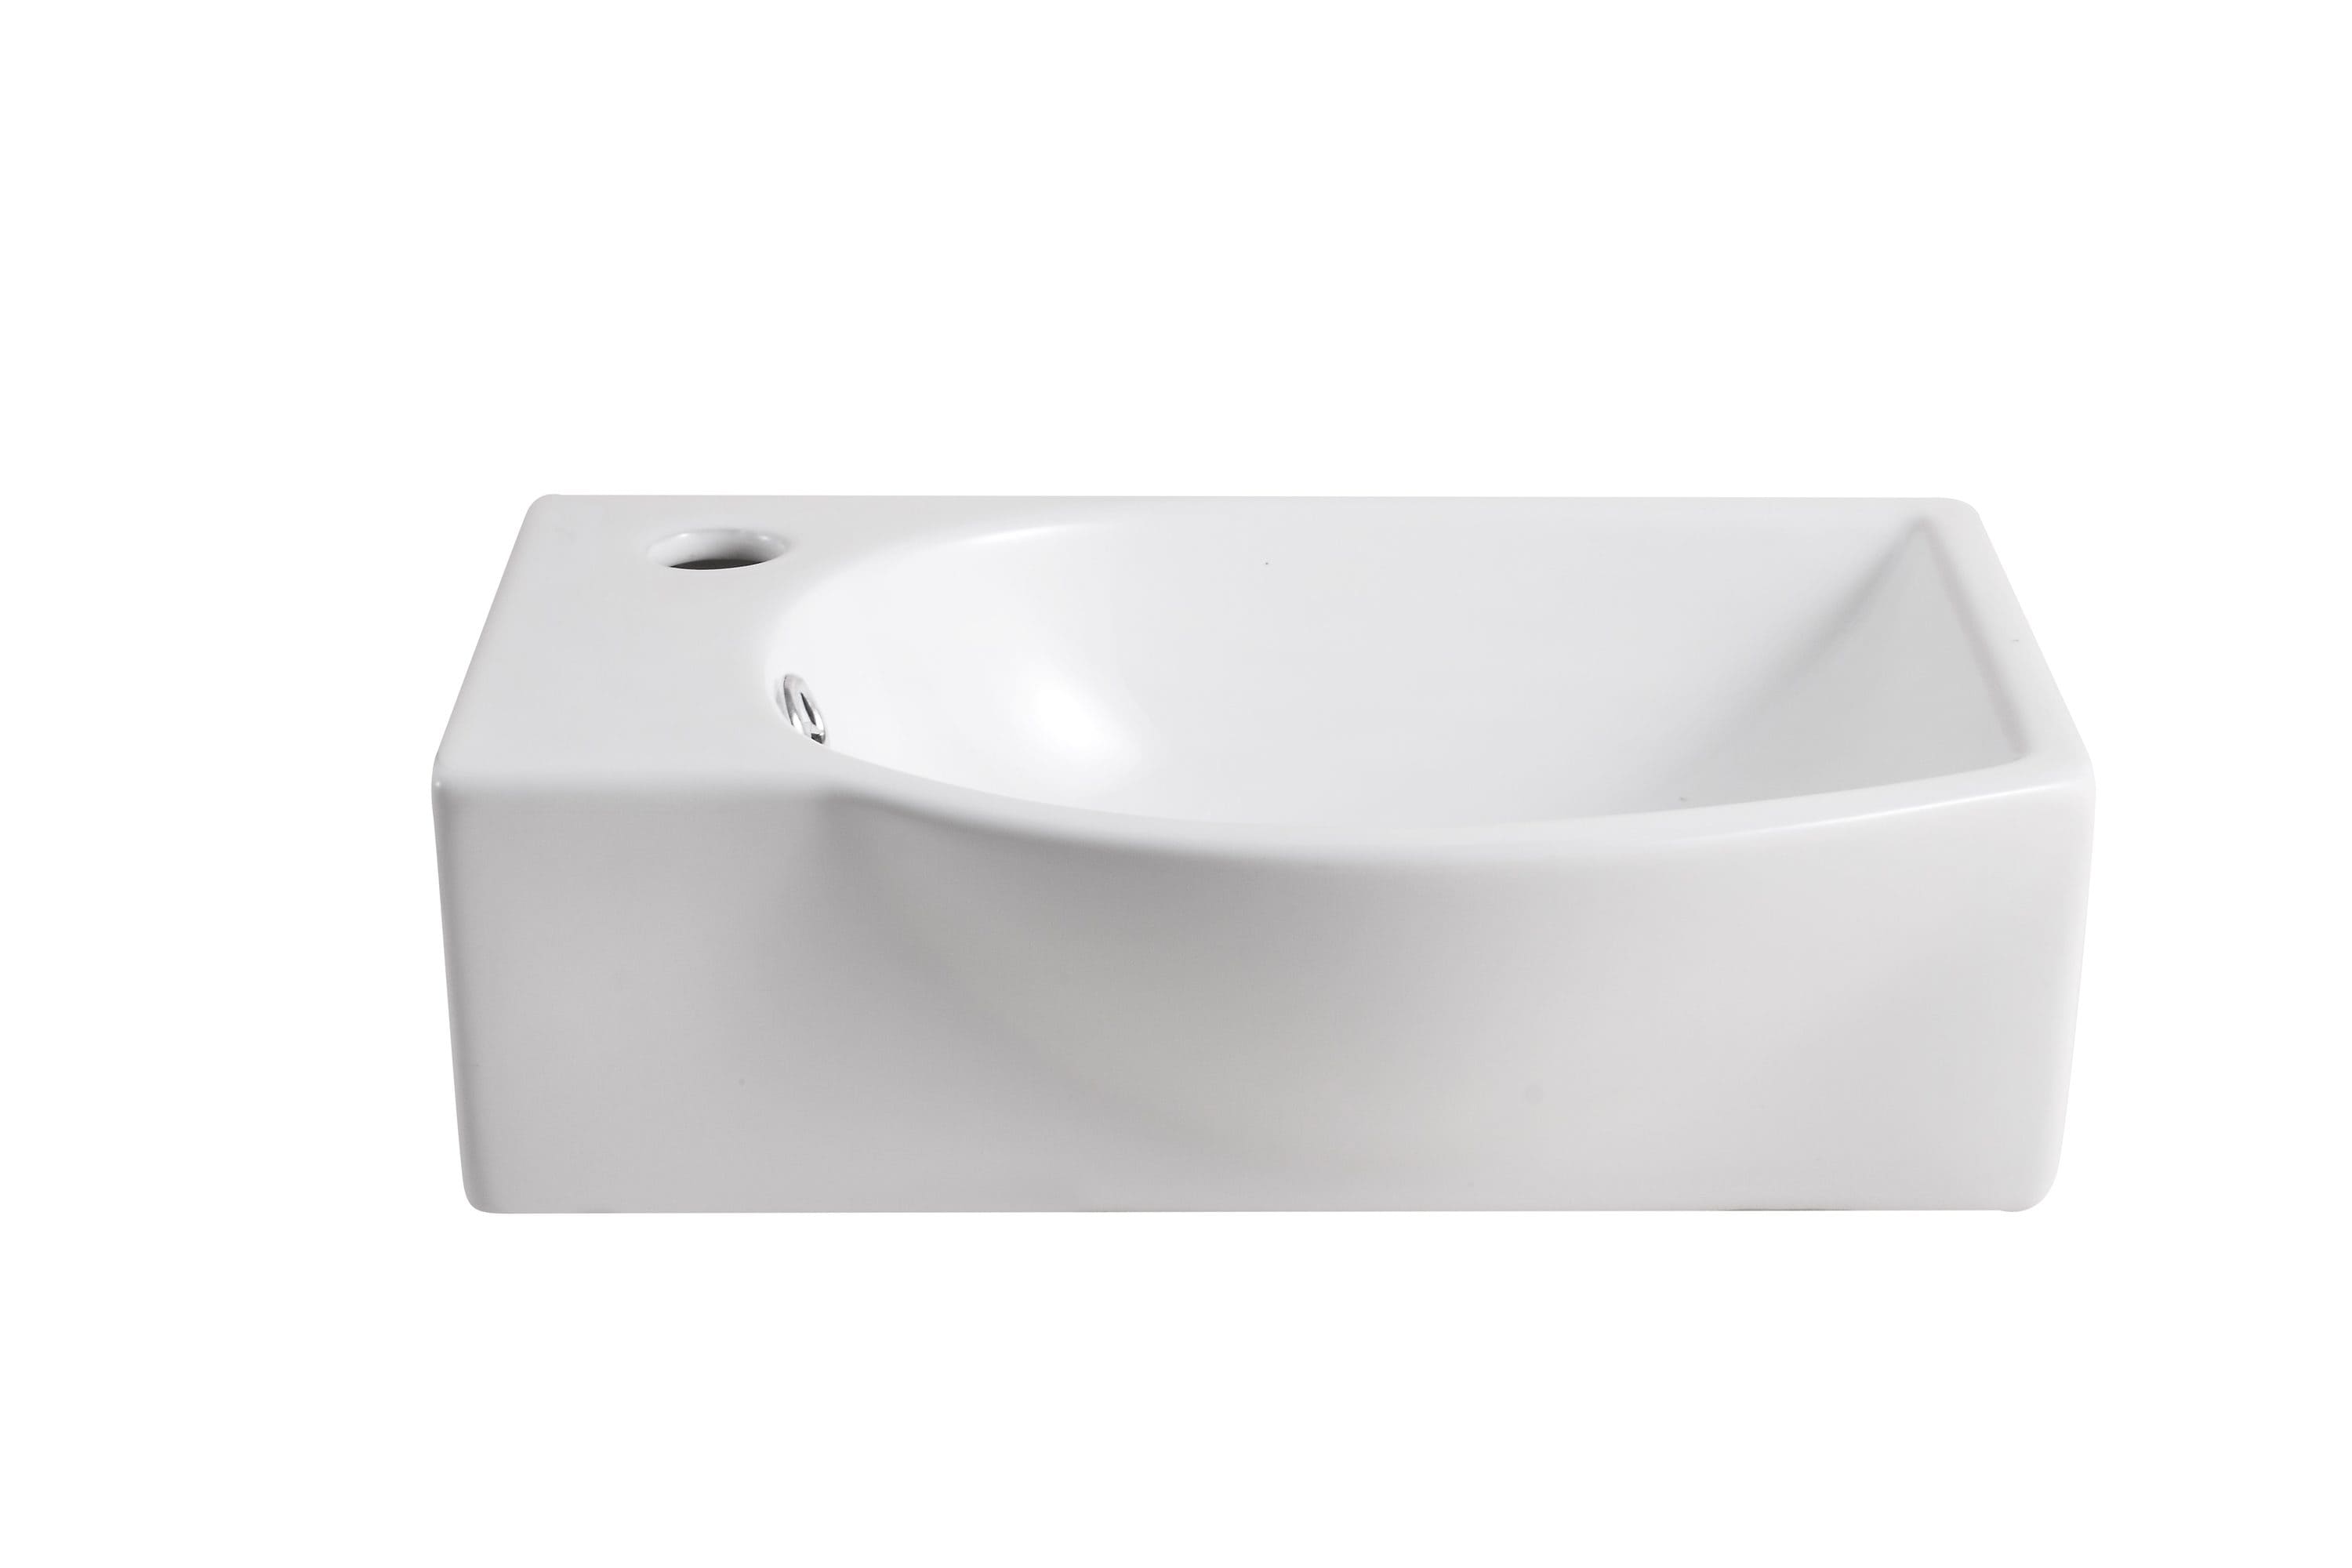 Elanti White Wall-mount Rectangular Modern Bathroom Sink (16-in x 11.25-in)  in the Bathroom Sinks department at